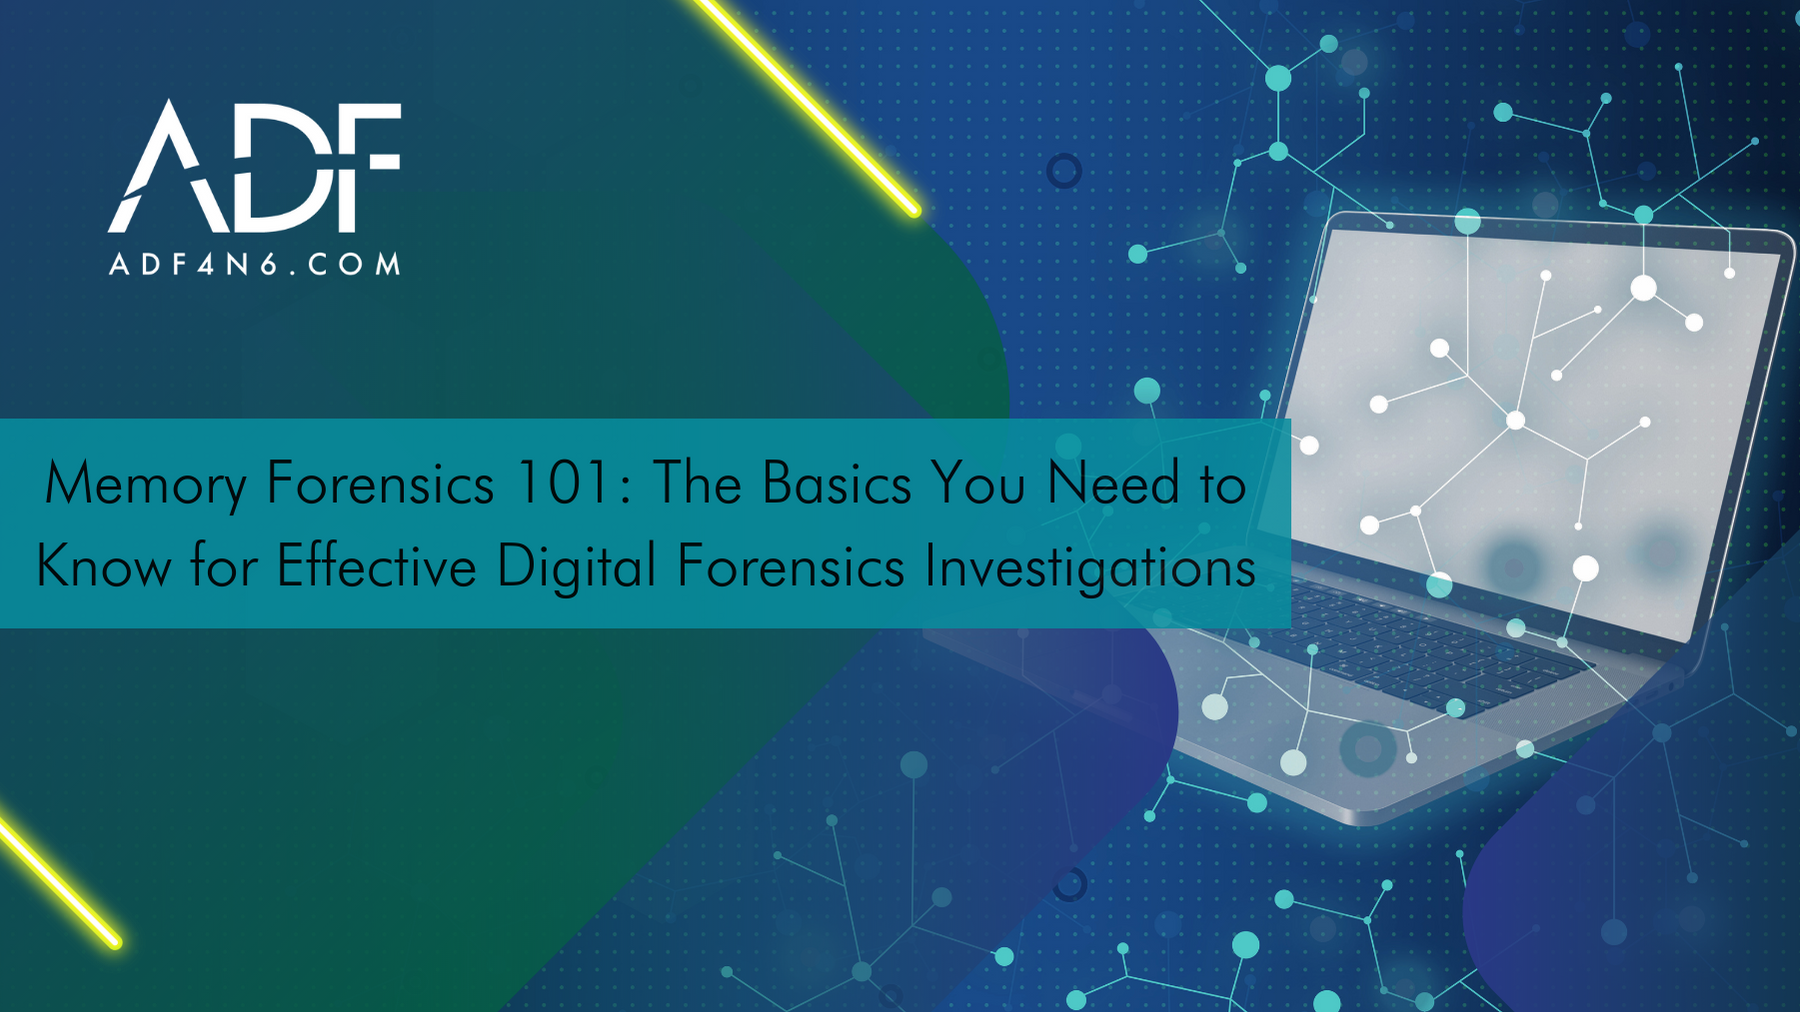 Memory Forensics: Effective Digital Forensics Investigations Basics